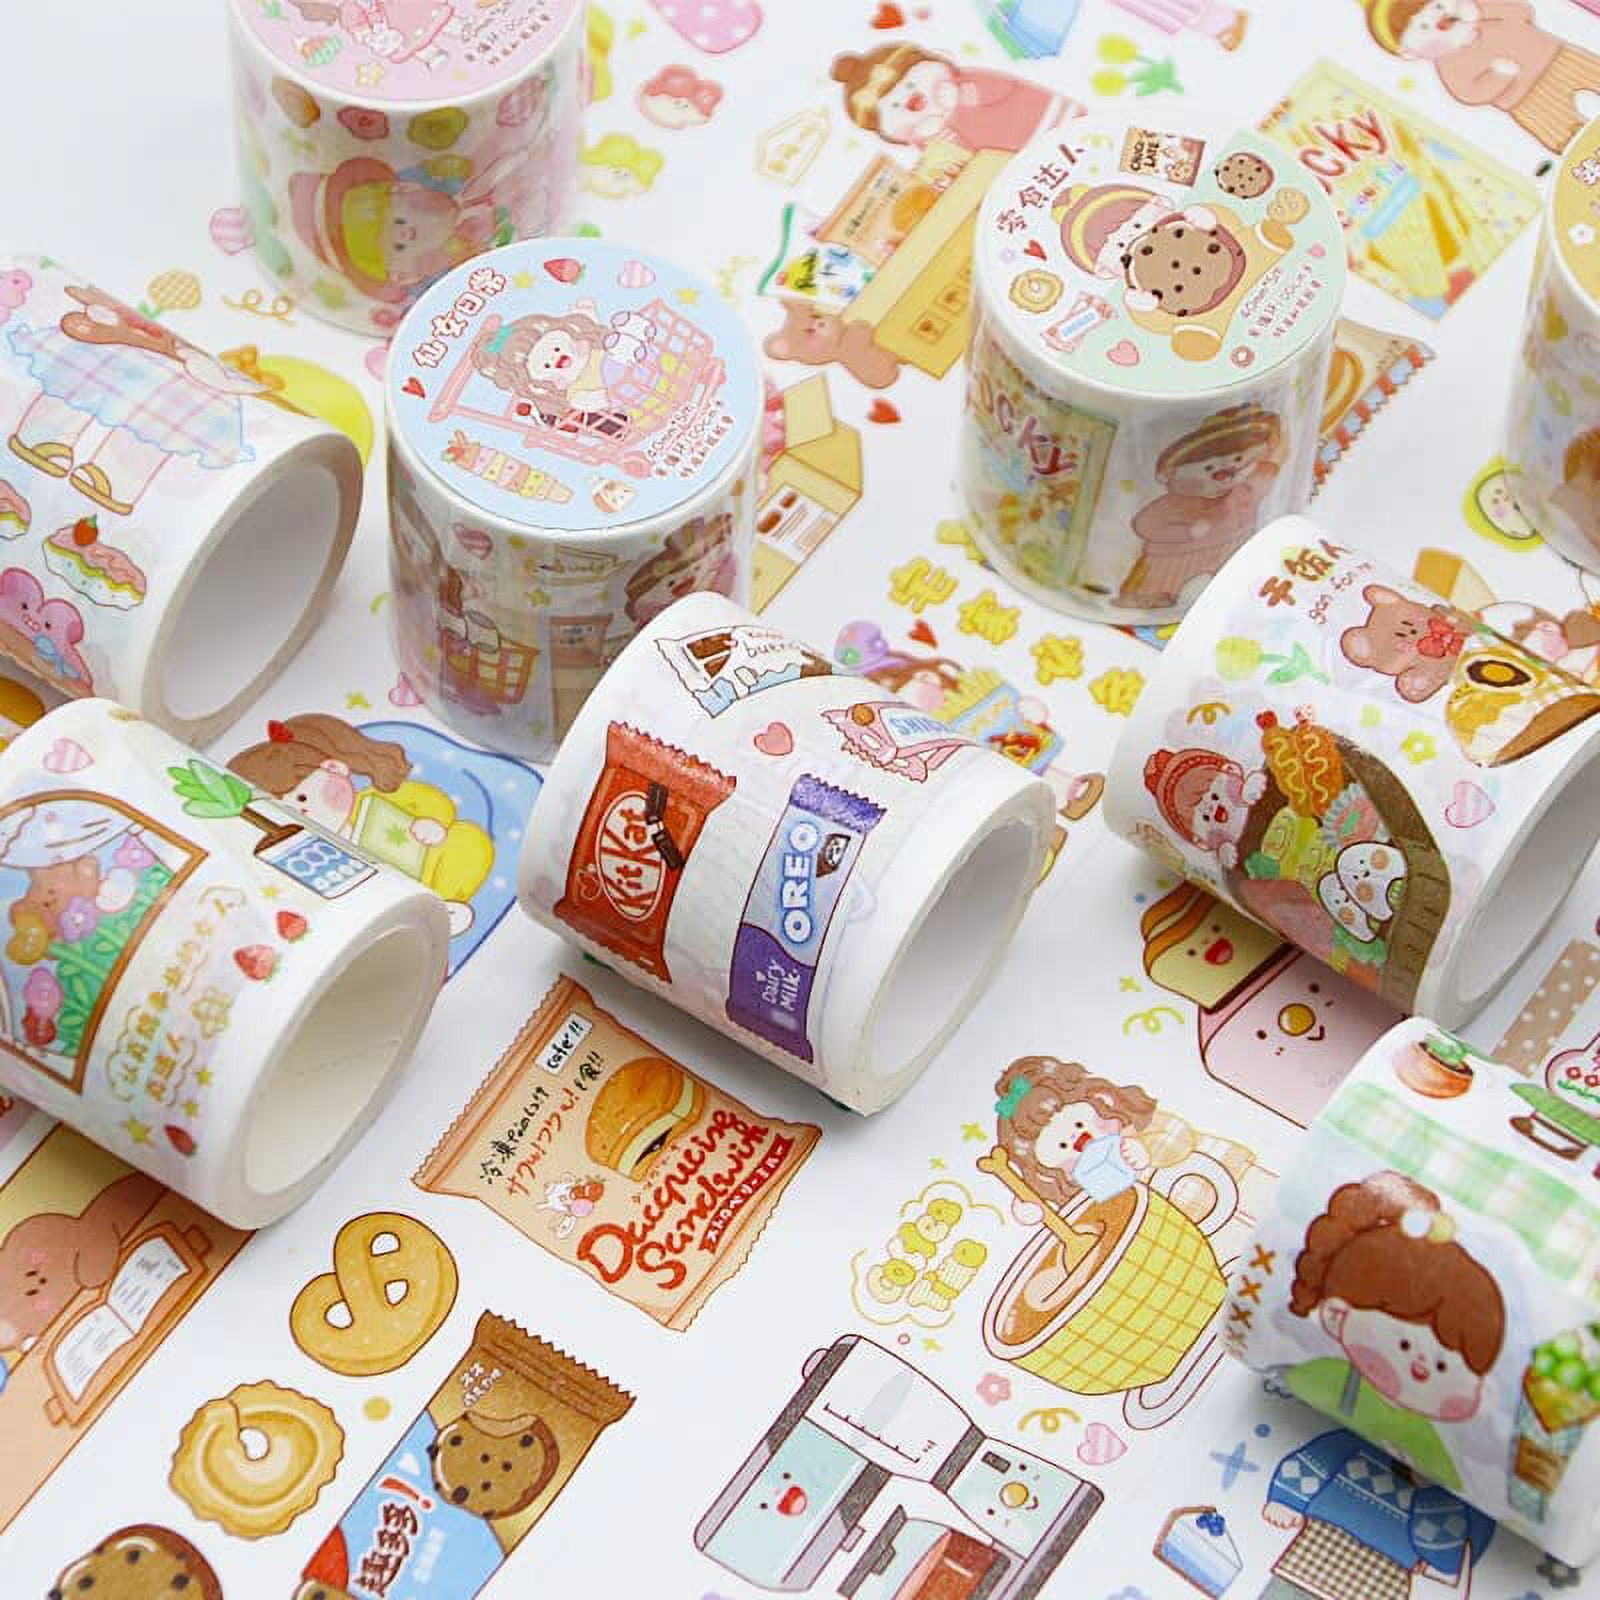 Danceemangoos Kawaii Washi Tape Set - Cute Washi Paper Masking Tape Set, DIY Decorative Stickers for Journaling, Scrapbooking, Crafts, School Stuff